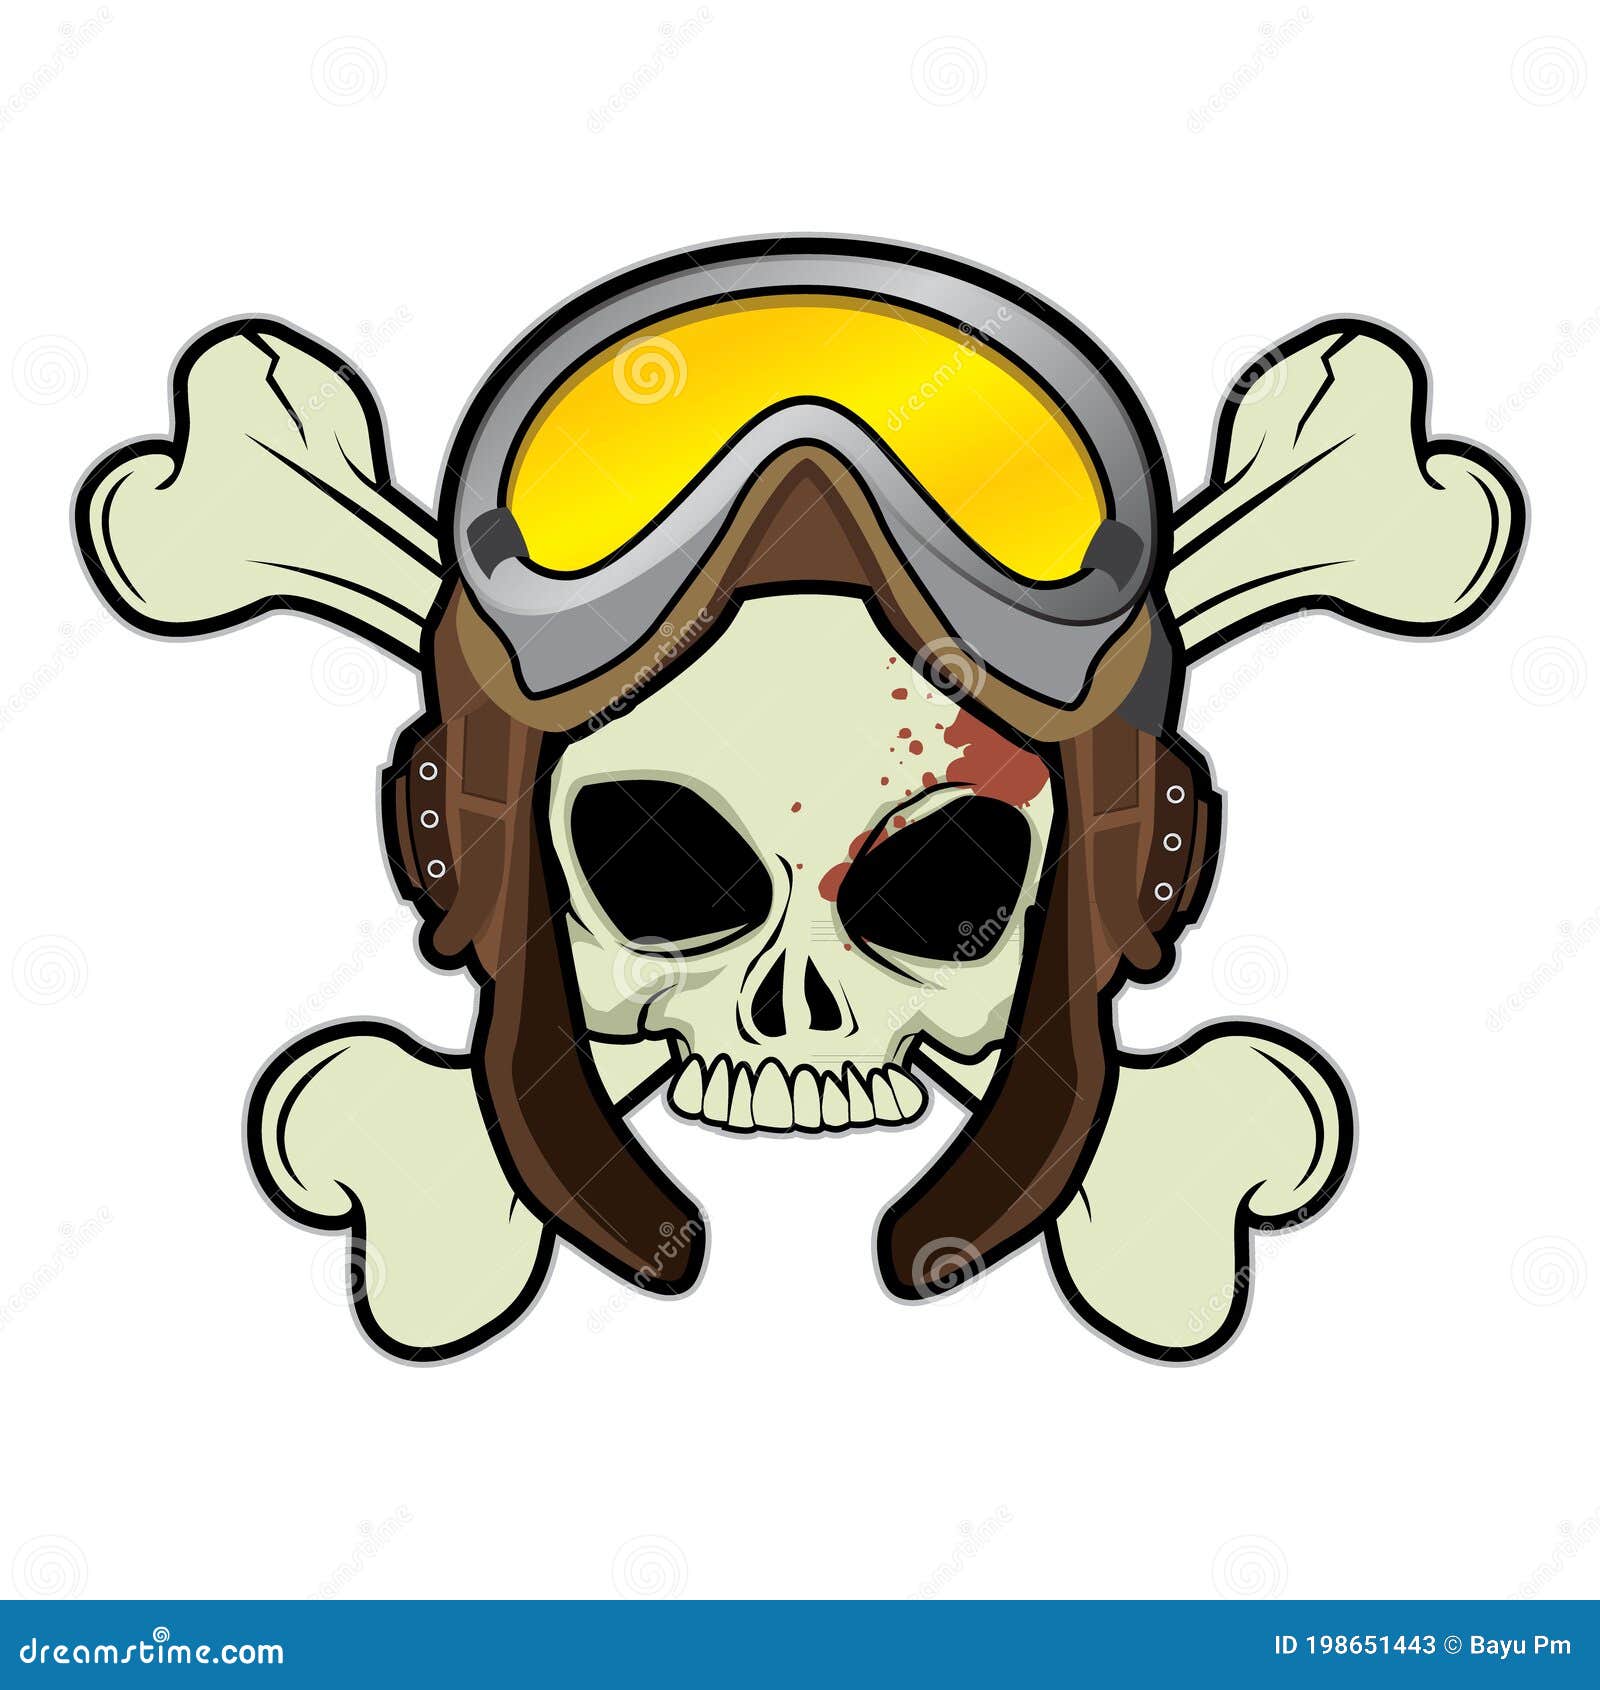 Pilot skull image Royalty Free Stock SVG Vector